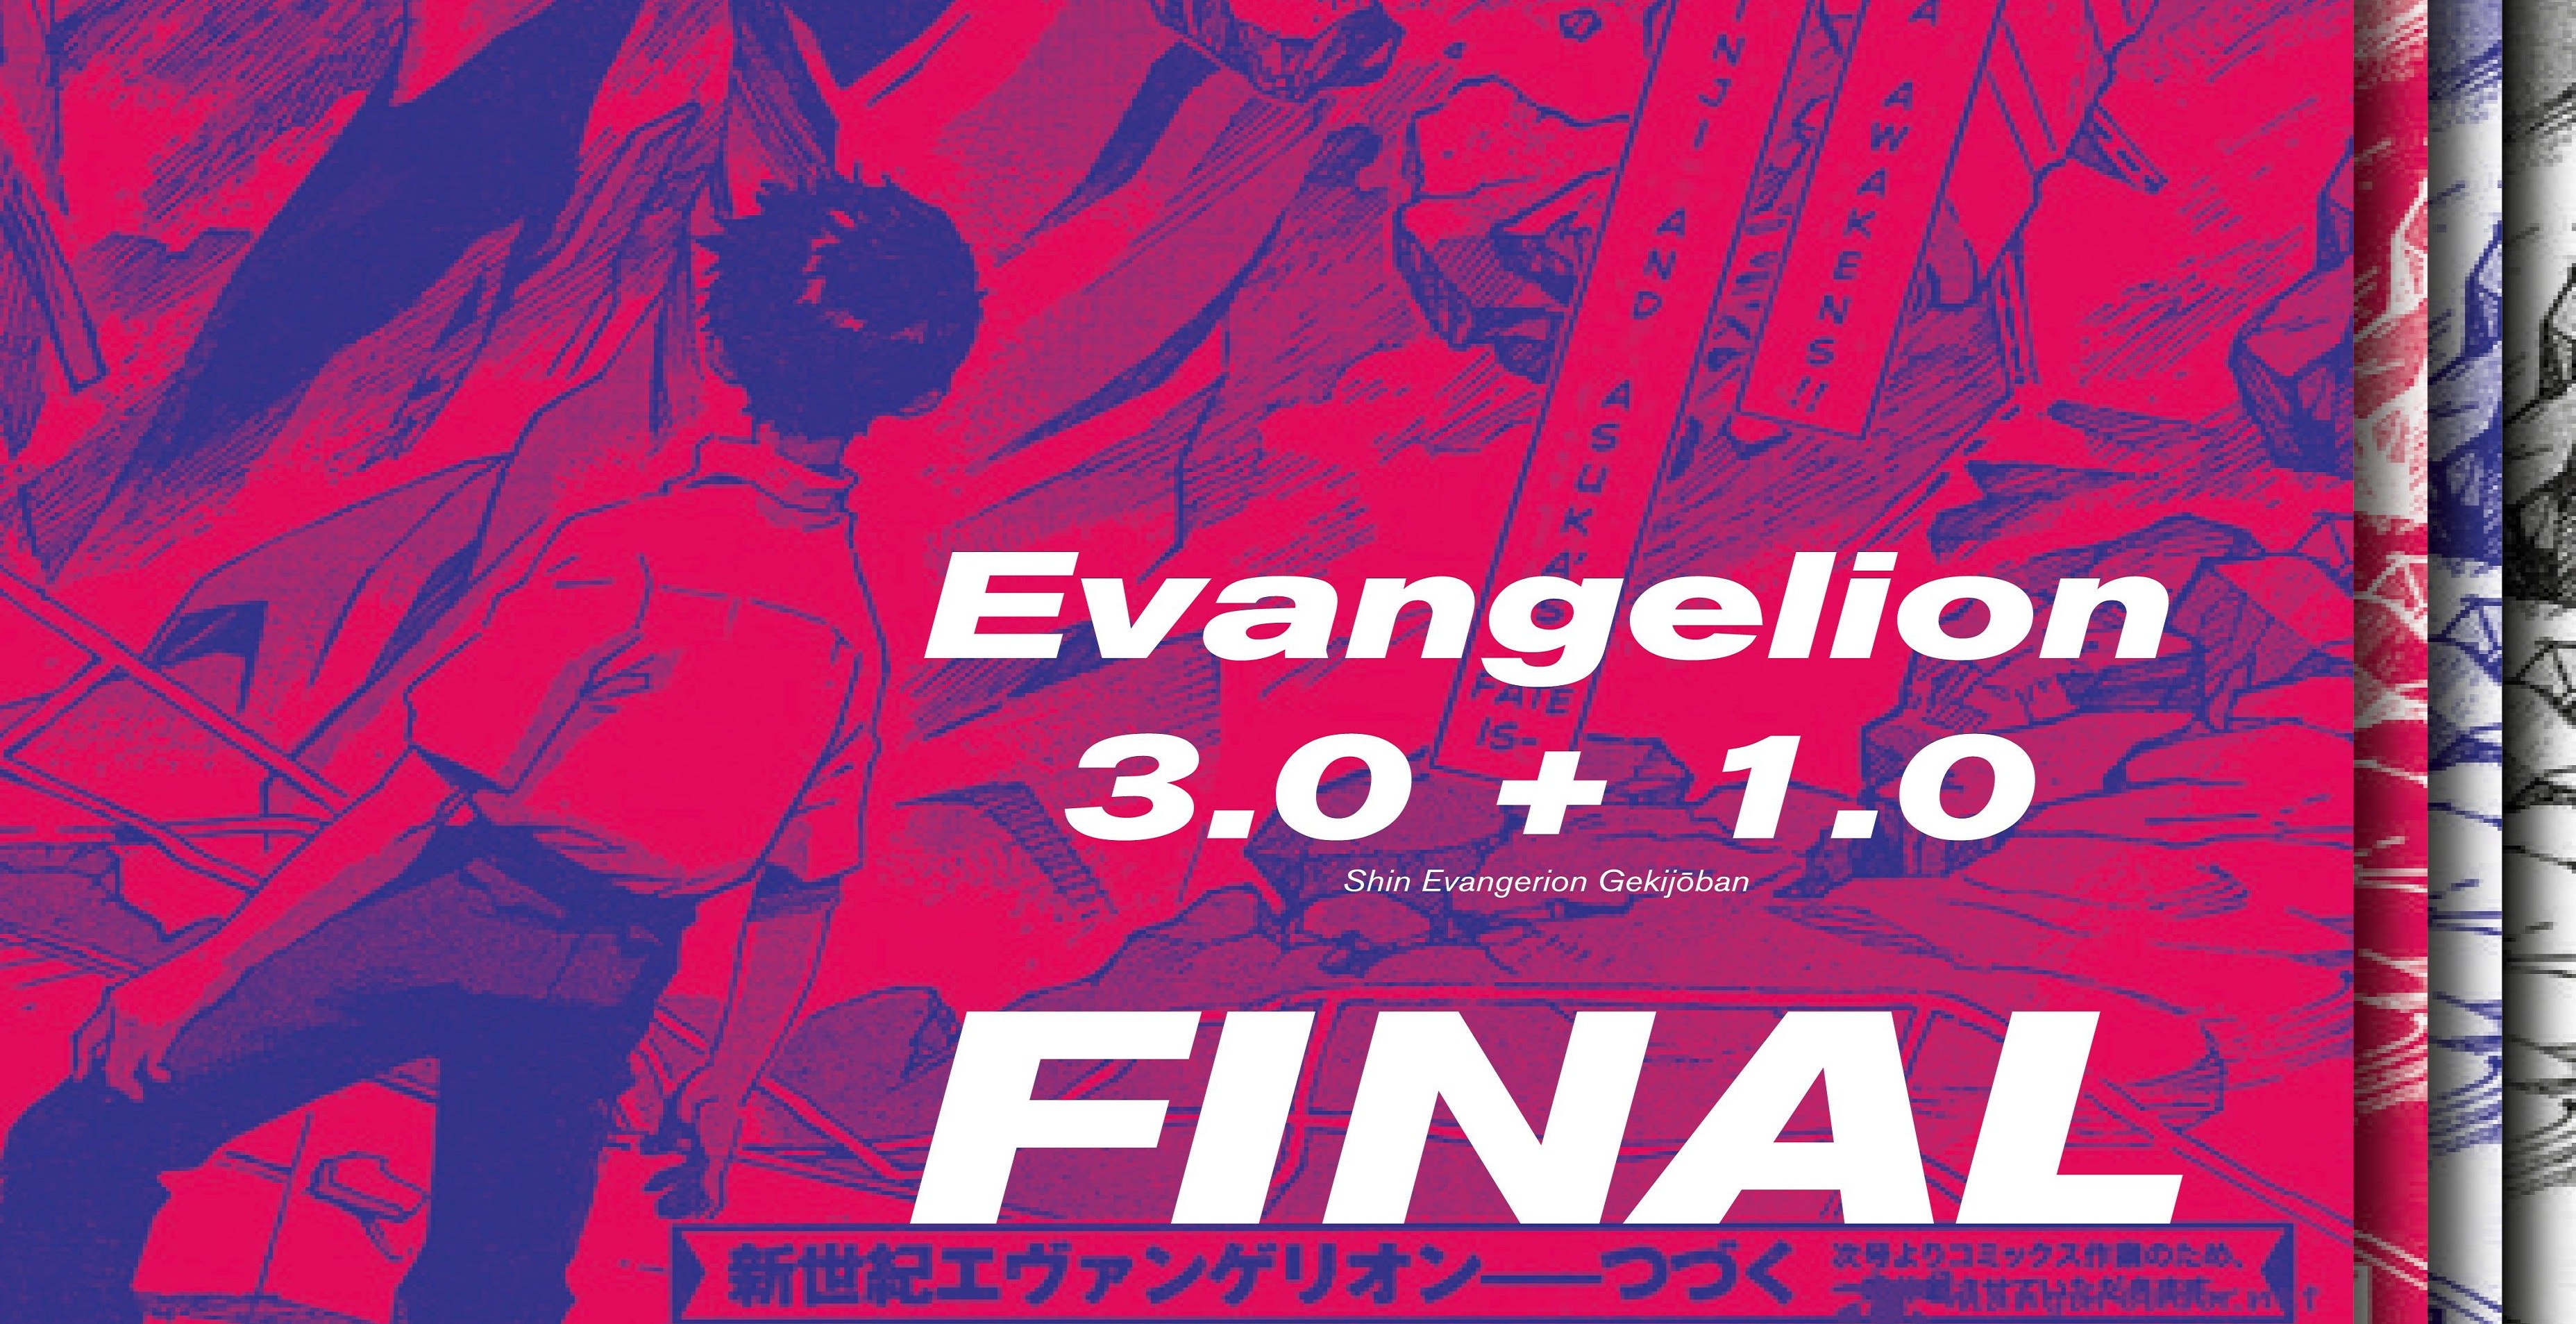 Евангелион 3.0+1.0 Финал 2020